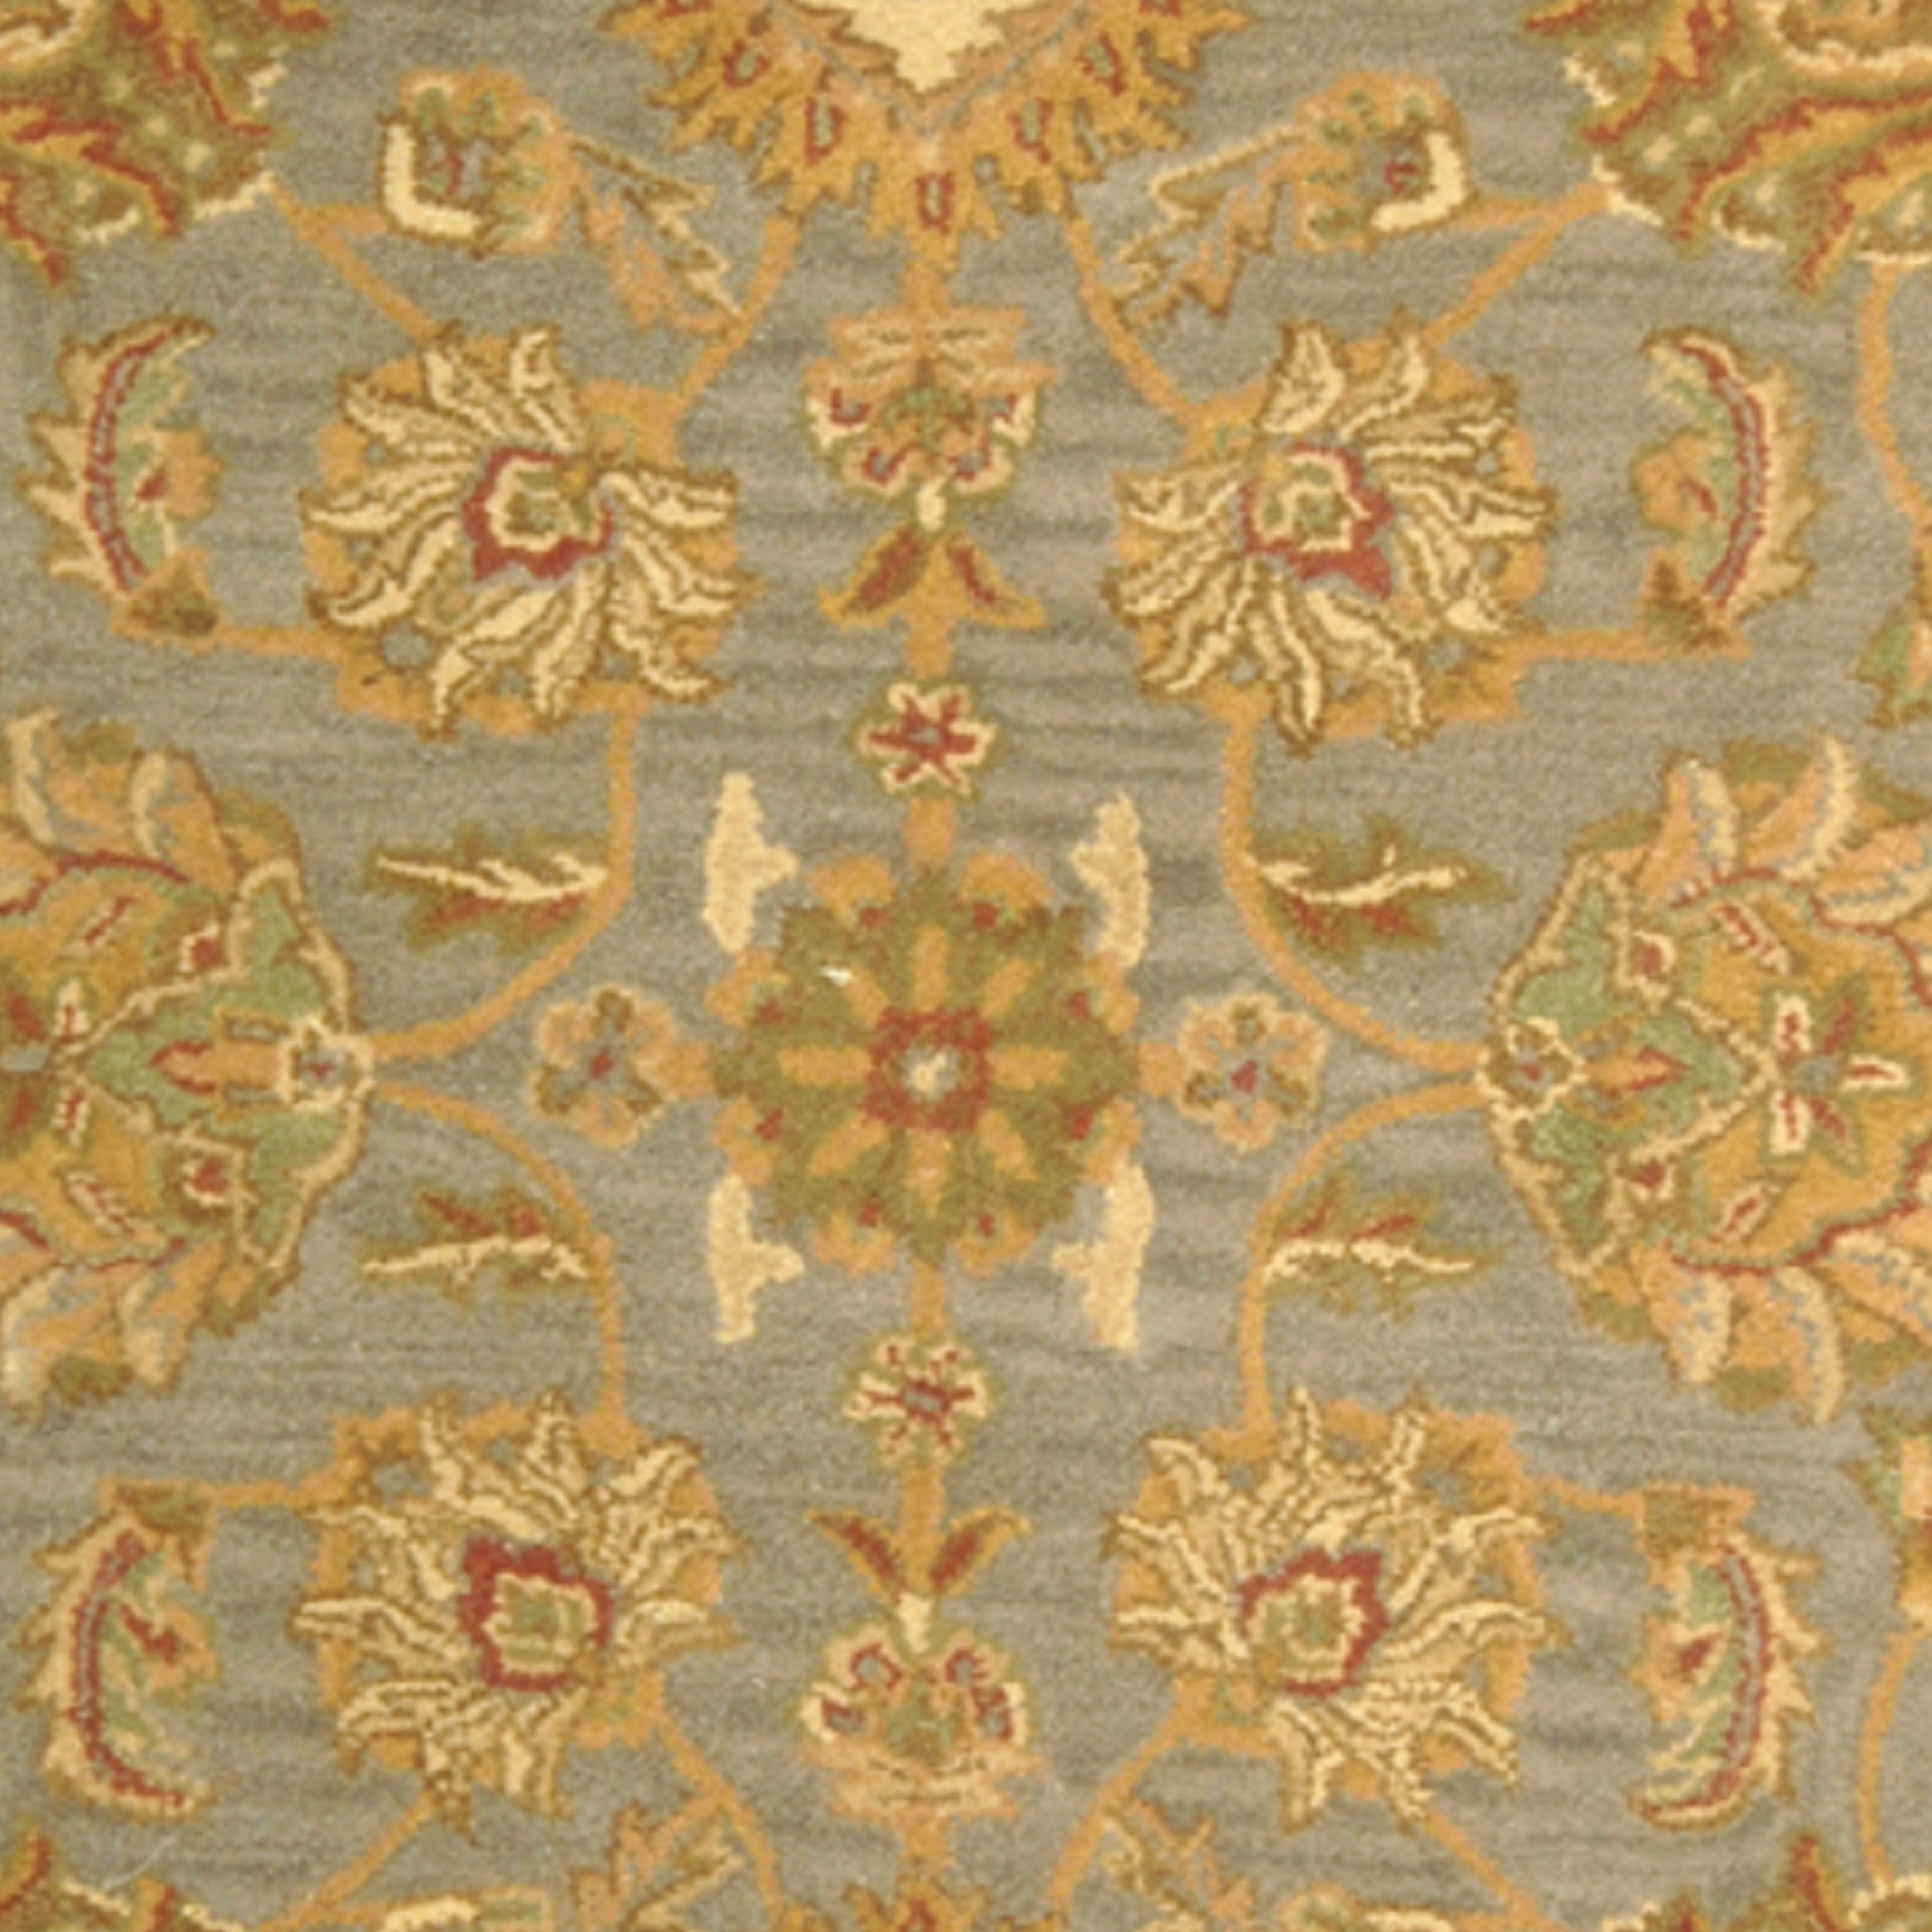 SAFAVIEH Heritage Regis Traditional Wool Area Rug, Blue/Beige, 3'6" x 3'6" Round - image 3 of 4